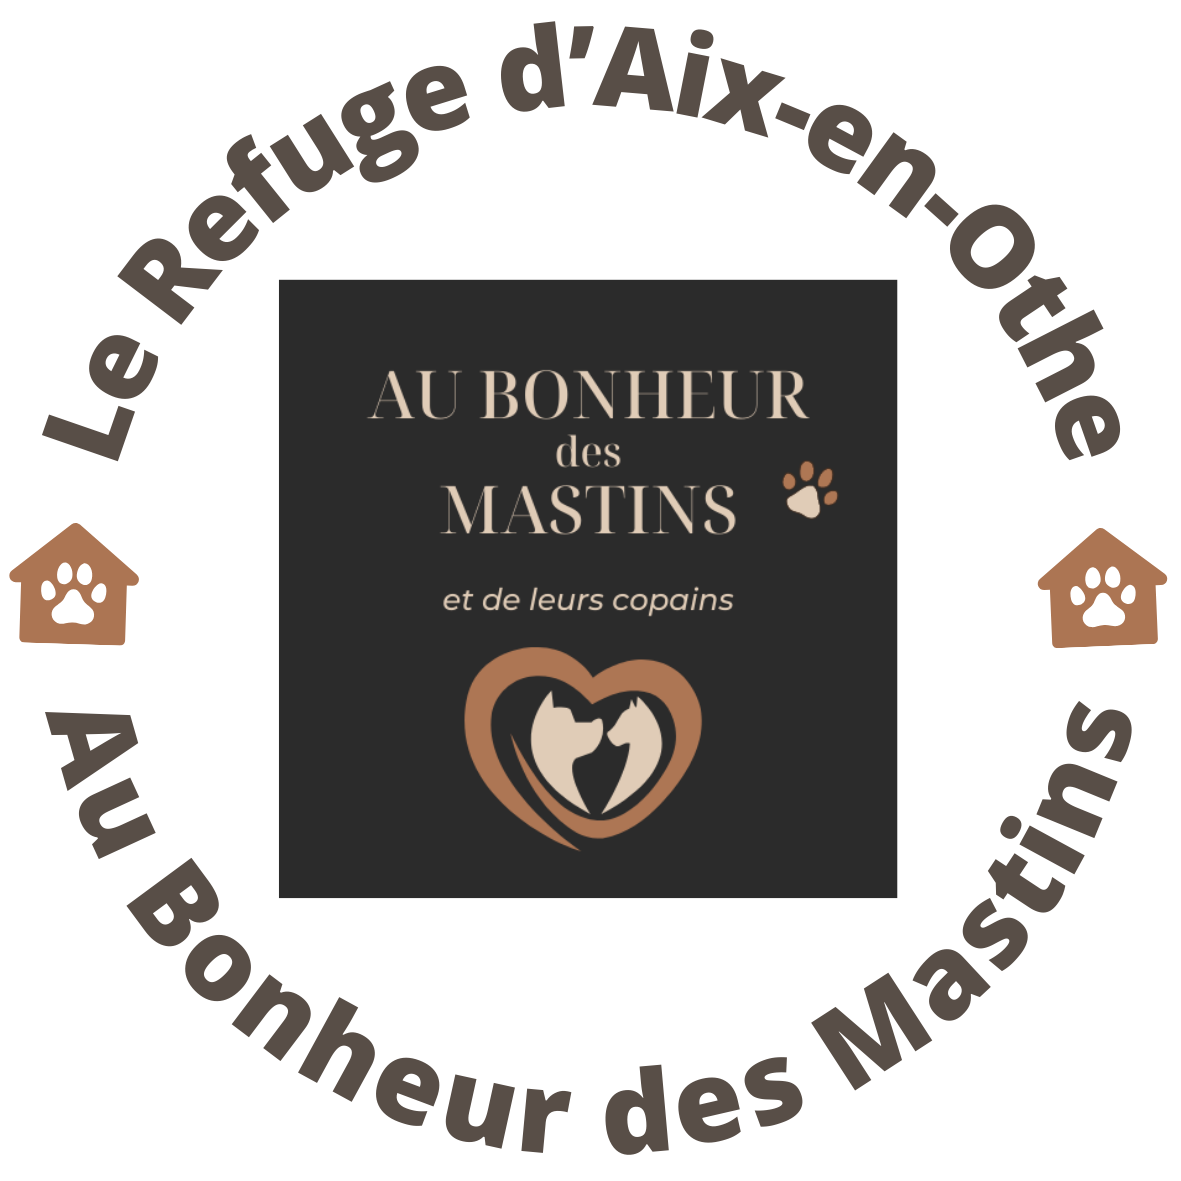 REFUGE D'AIX-EN-OTHE AU BONHEUR DES MASTINS